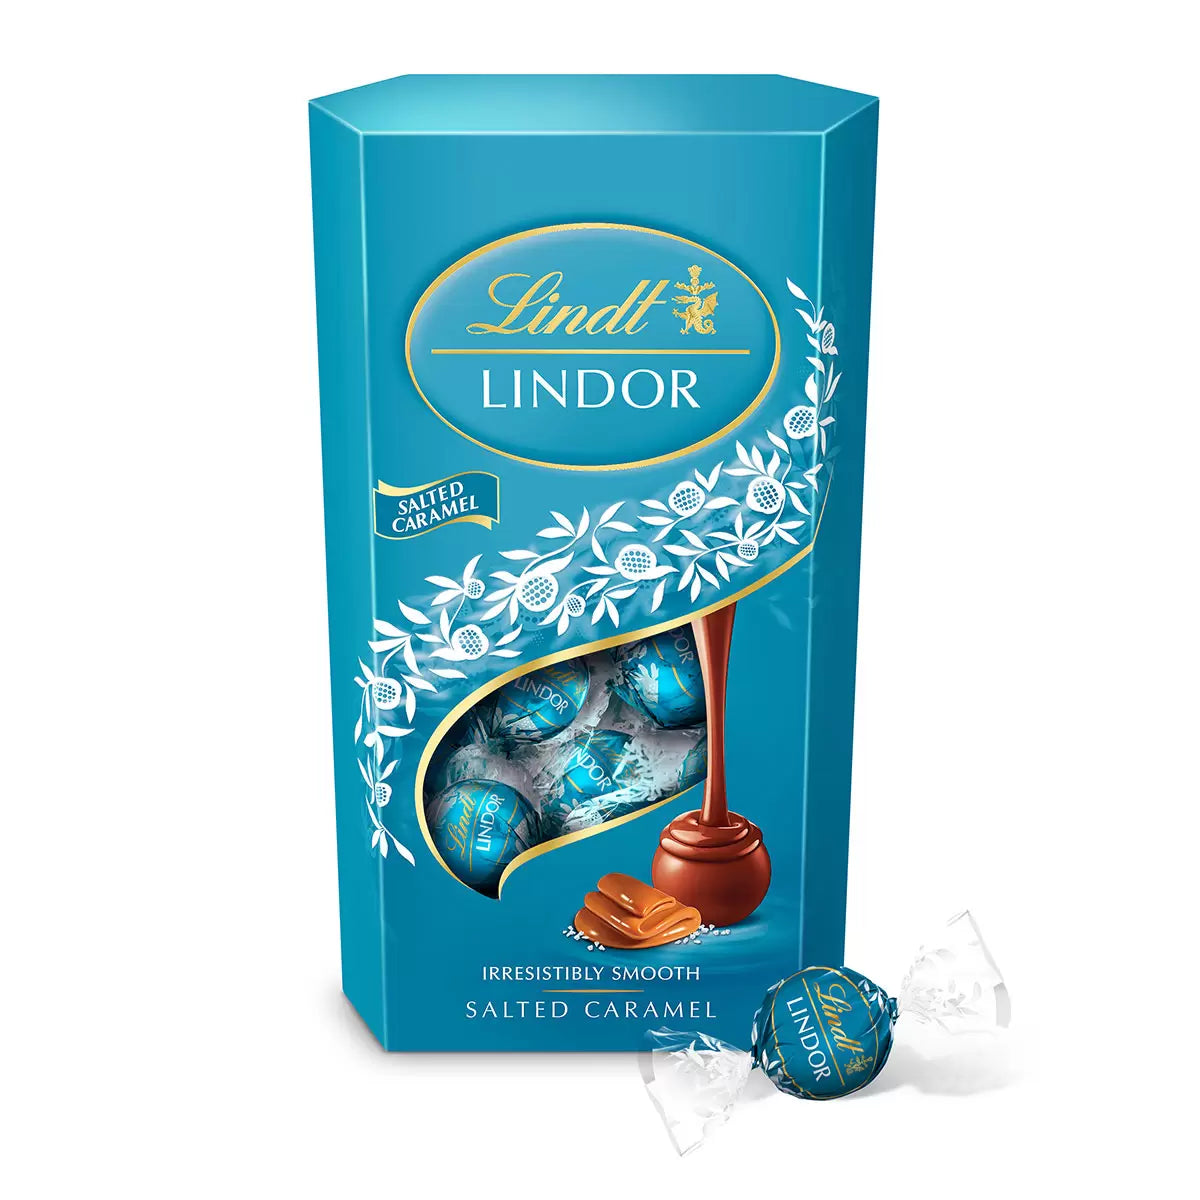 Lindt Lindor Salted Caramel Chocolate Truffles - 600g